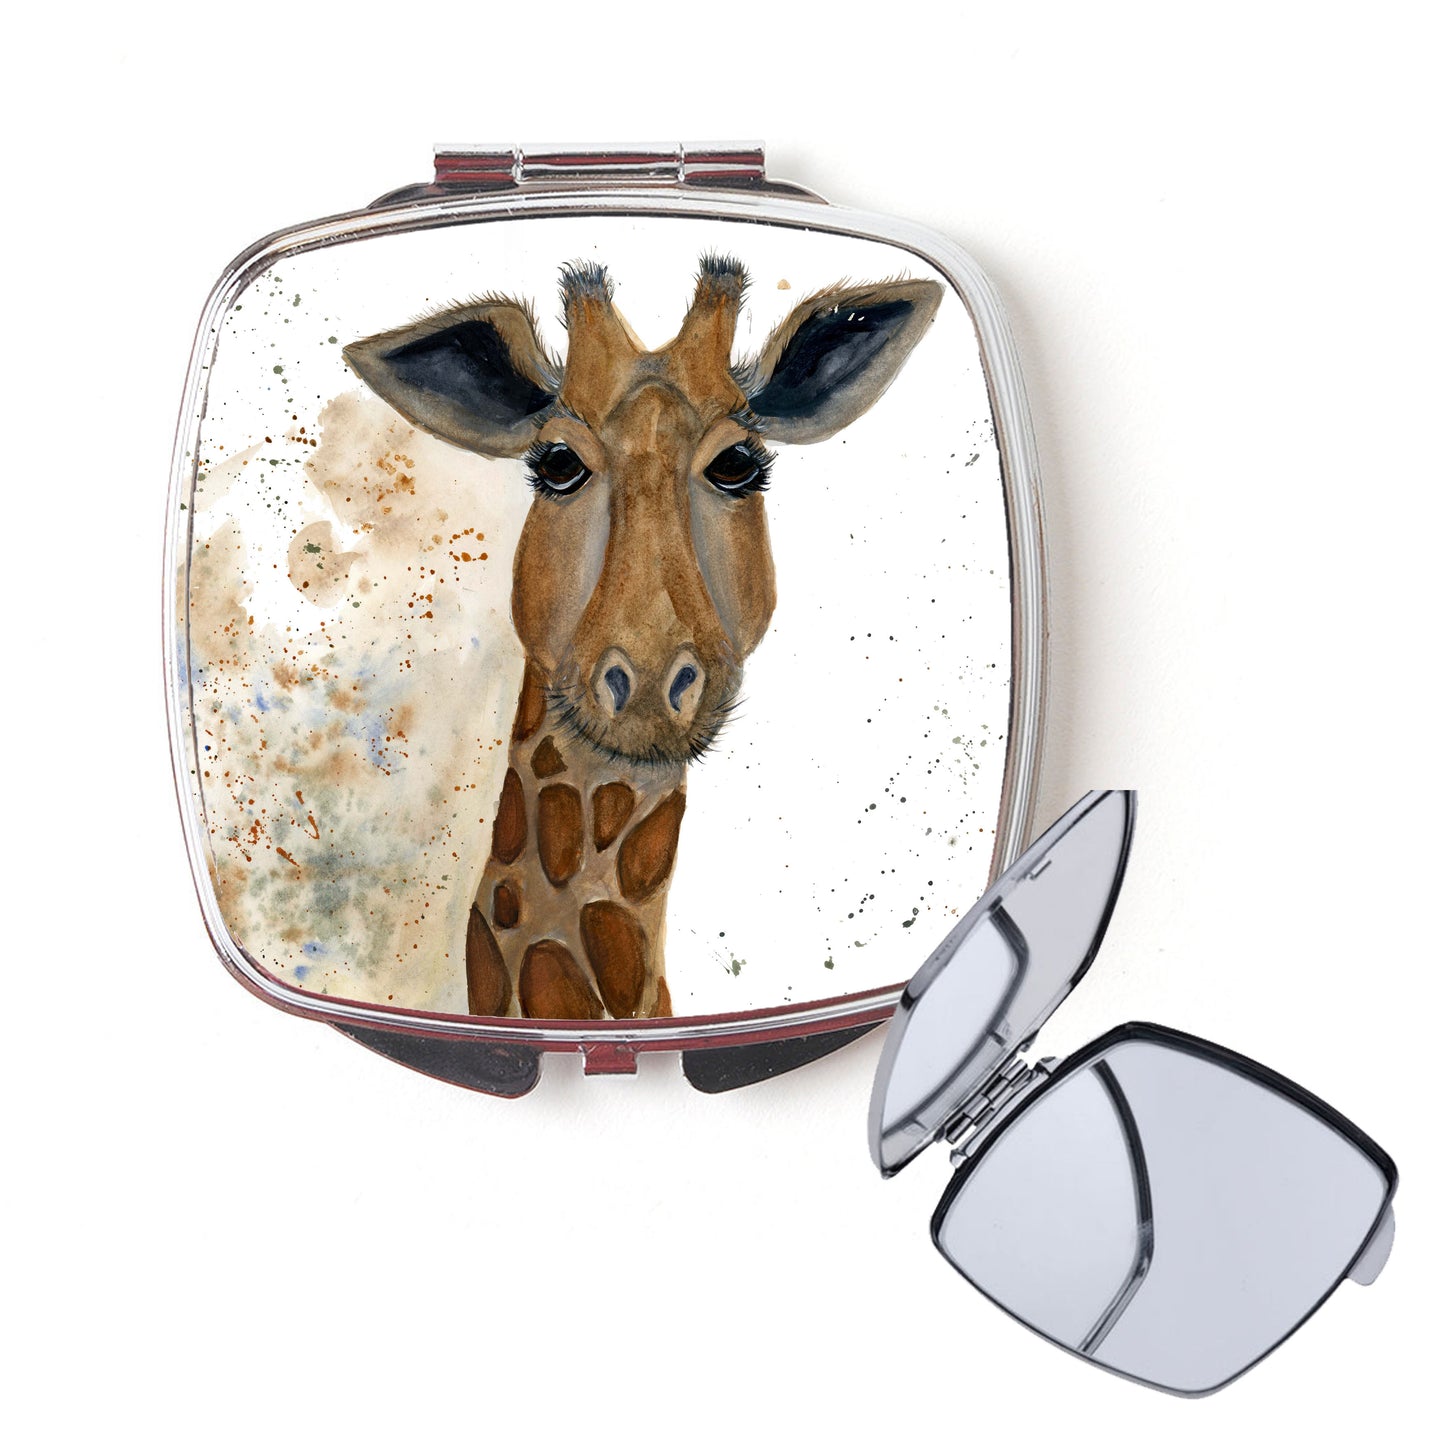 Giraffe compact mirror